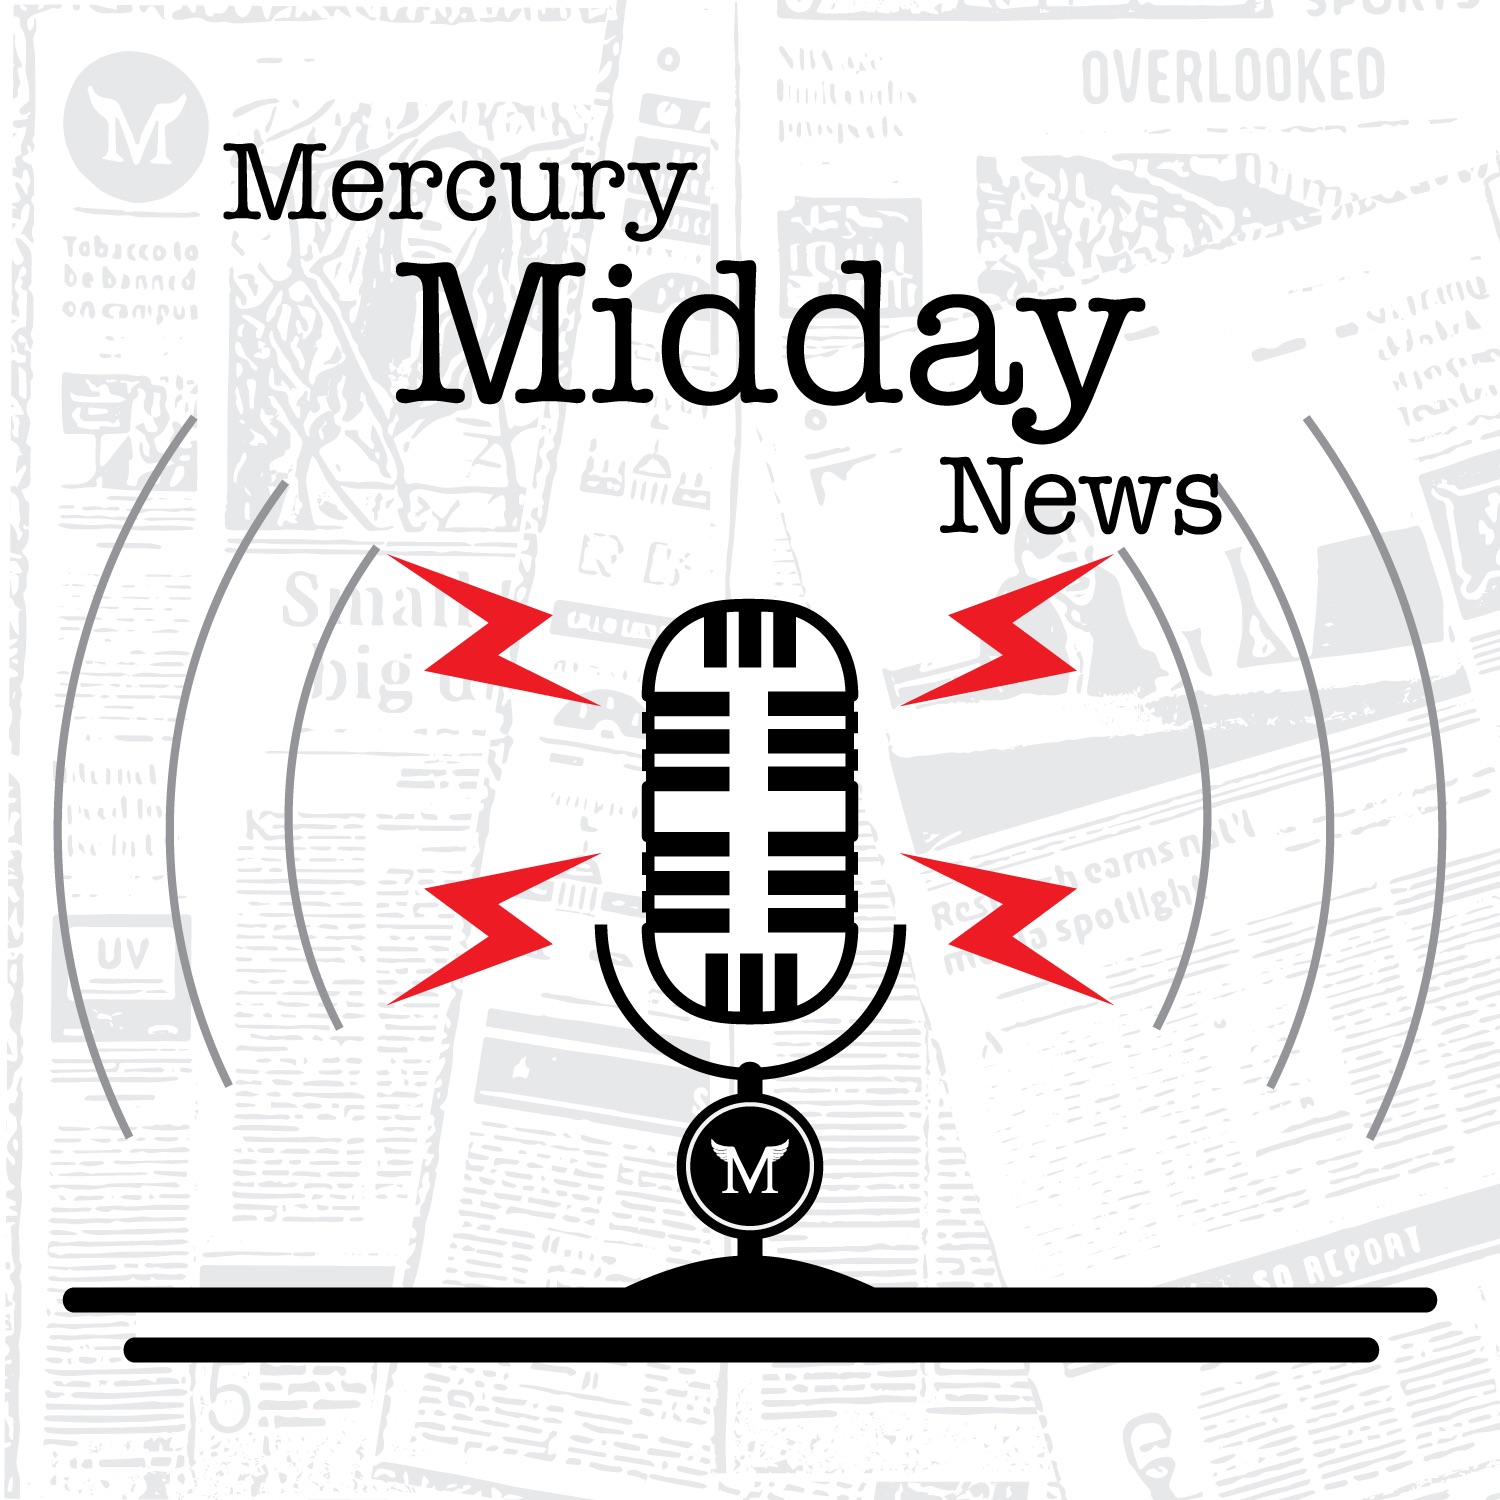 Mercury Midday News 01/26/17